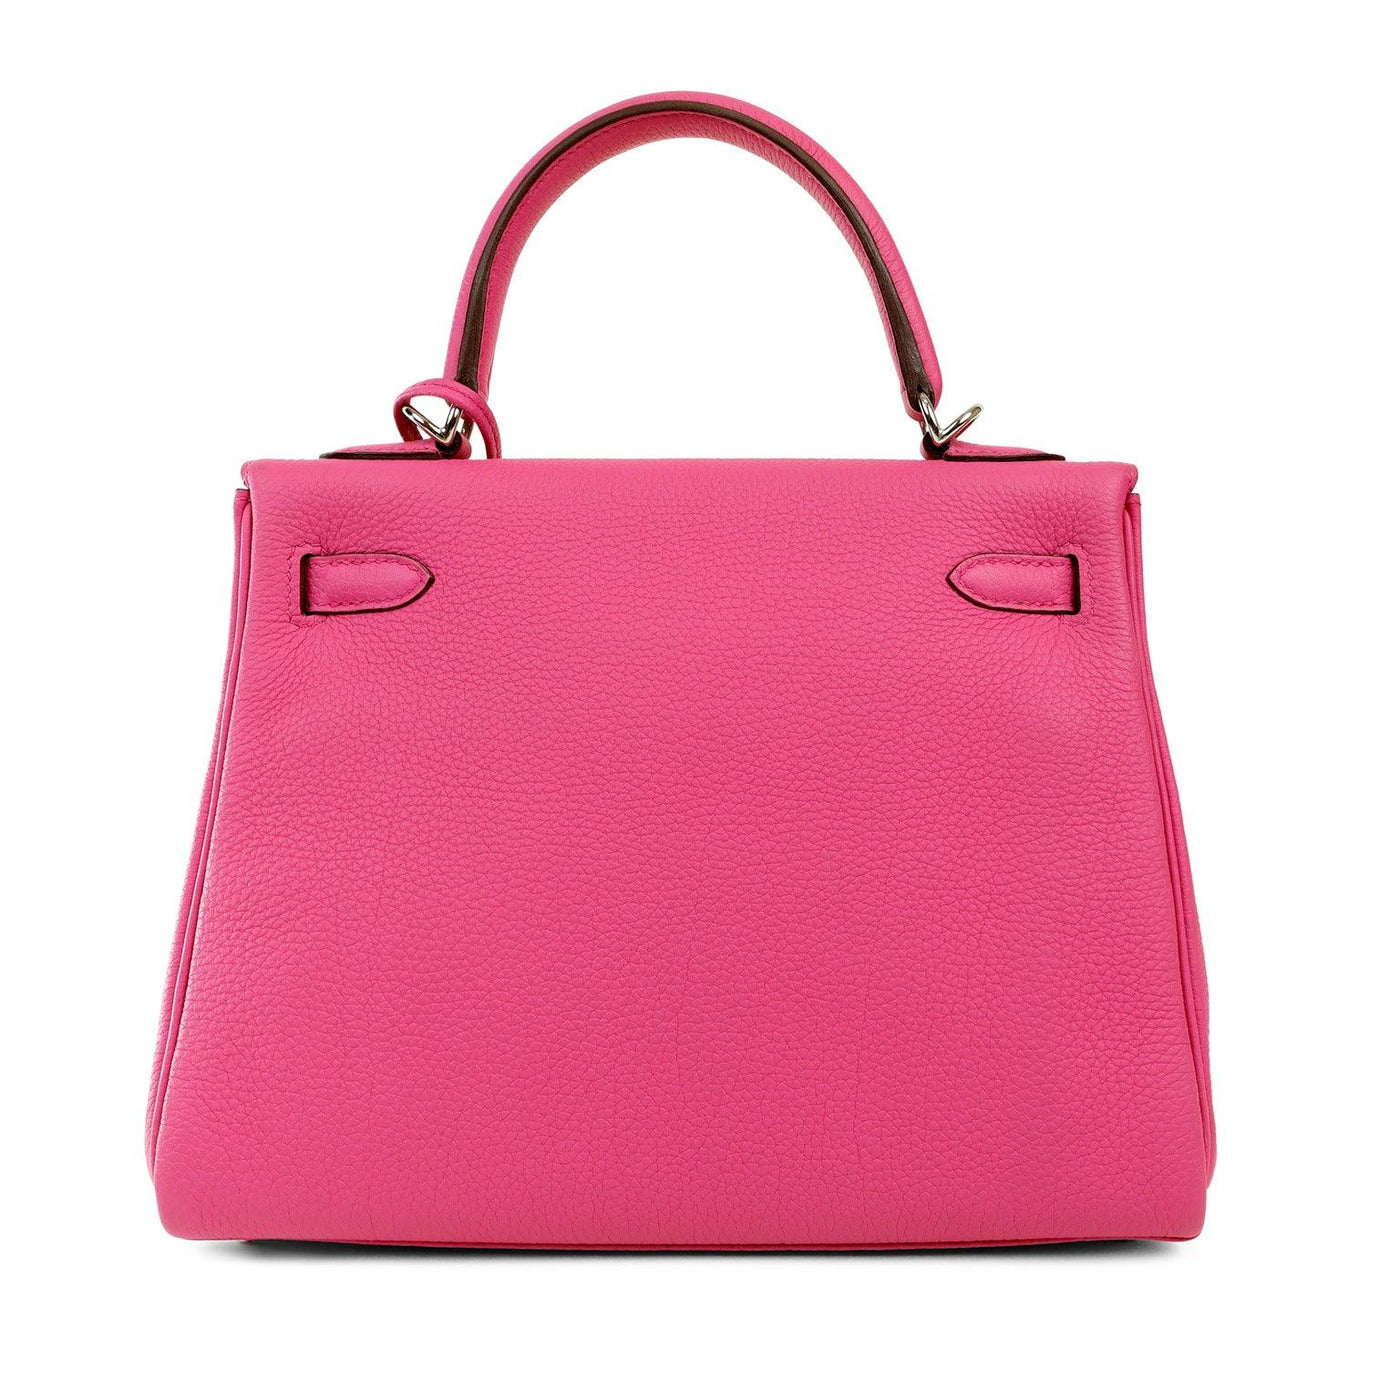 Hermès 25cm Pink Magnolia Togo Kelly with Palladium Hardware - Only Authentics